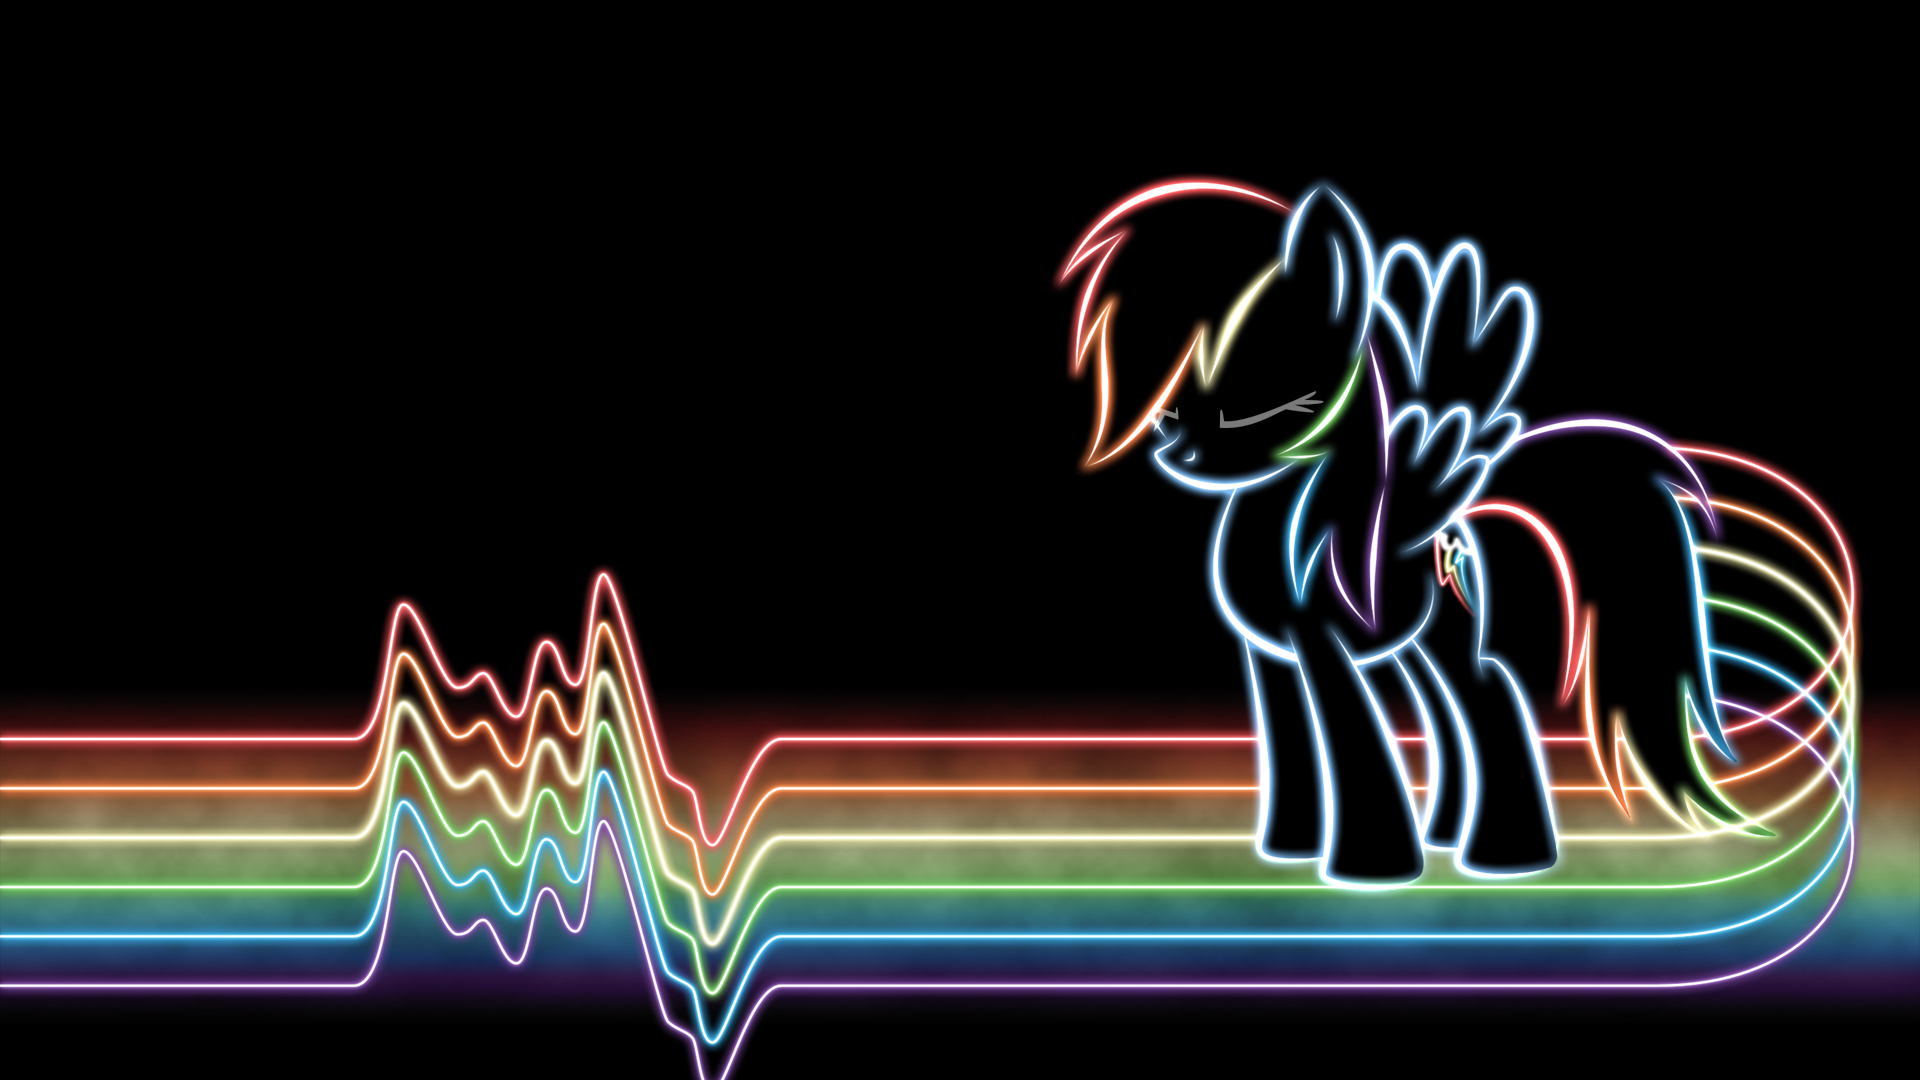 tv show, my little pony: friendship is magic, my little pony, rainbow dash